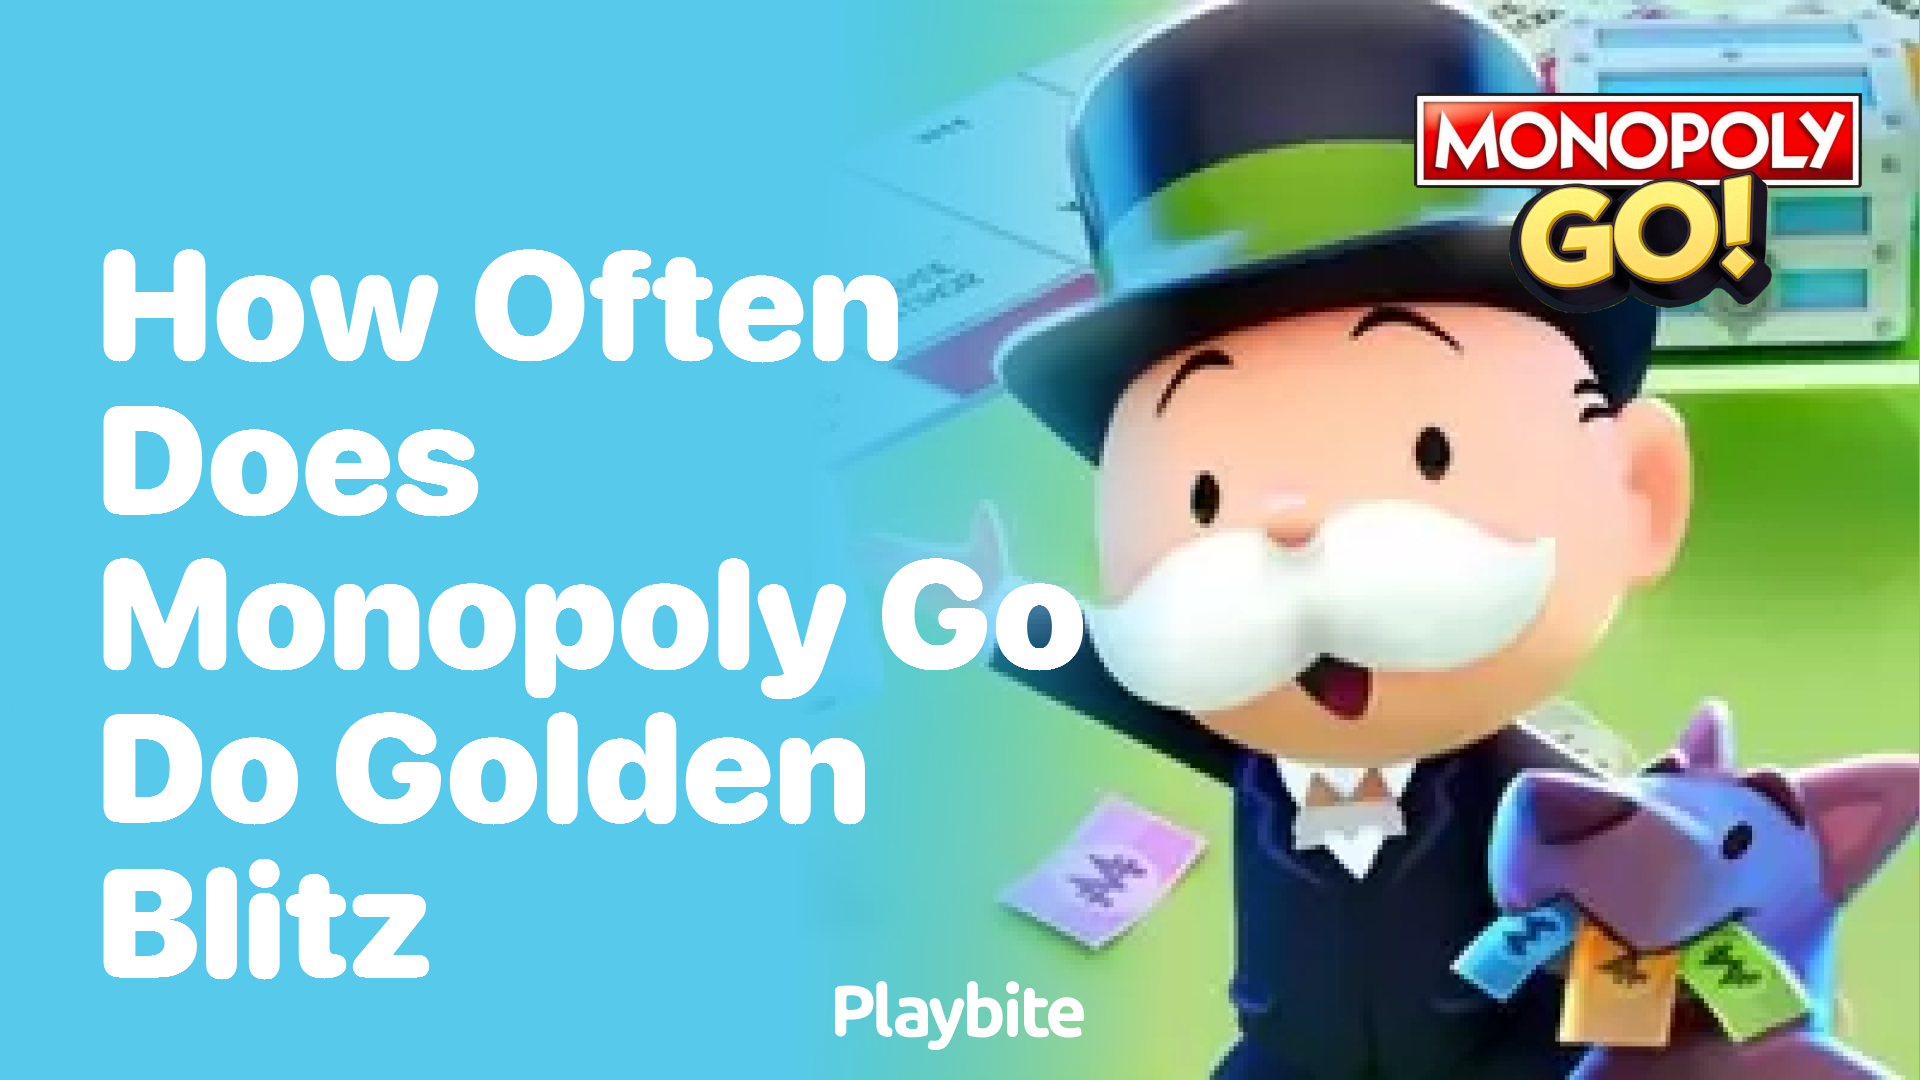 How Often Does Monopoly Go Launch Golden Blitz?